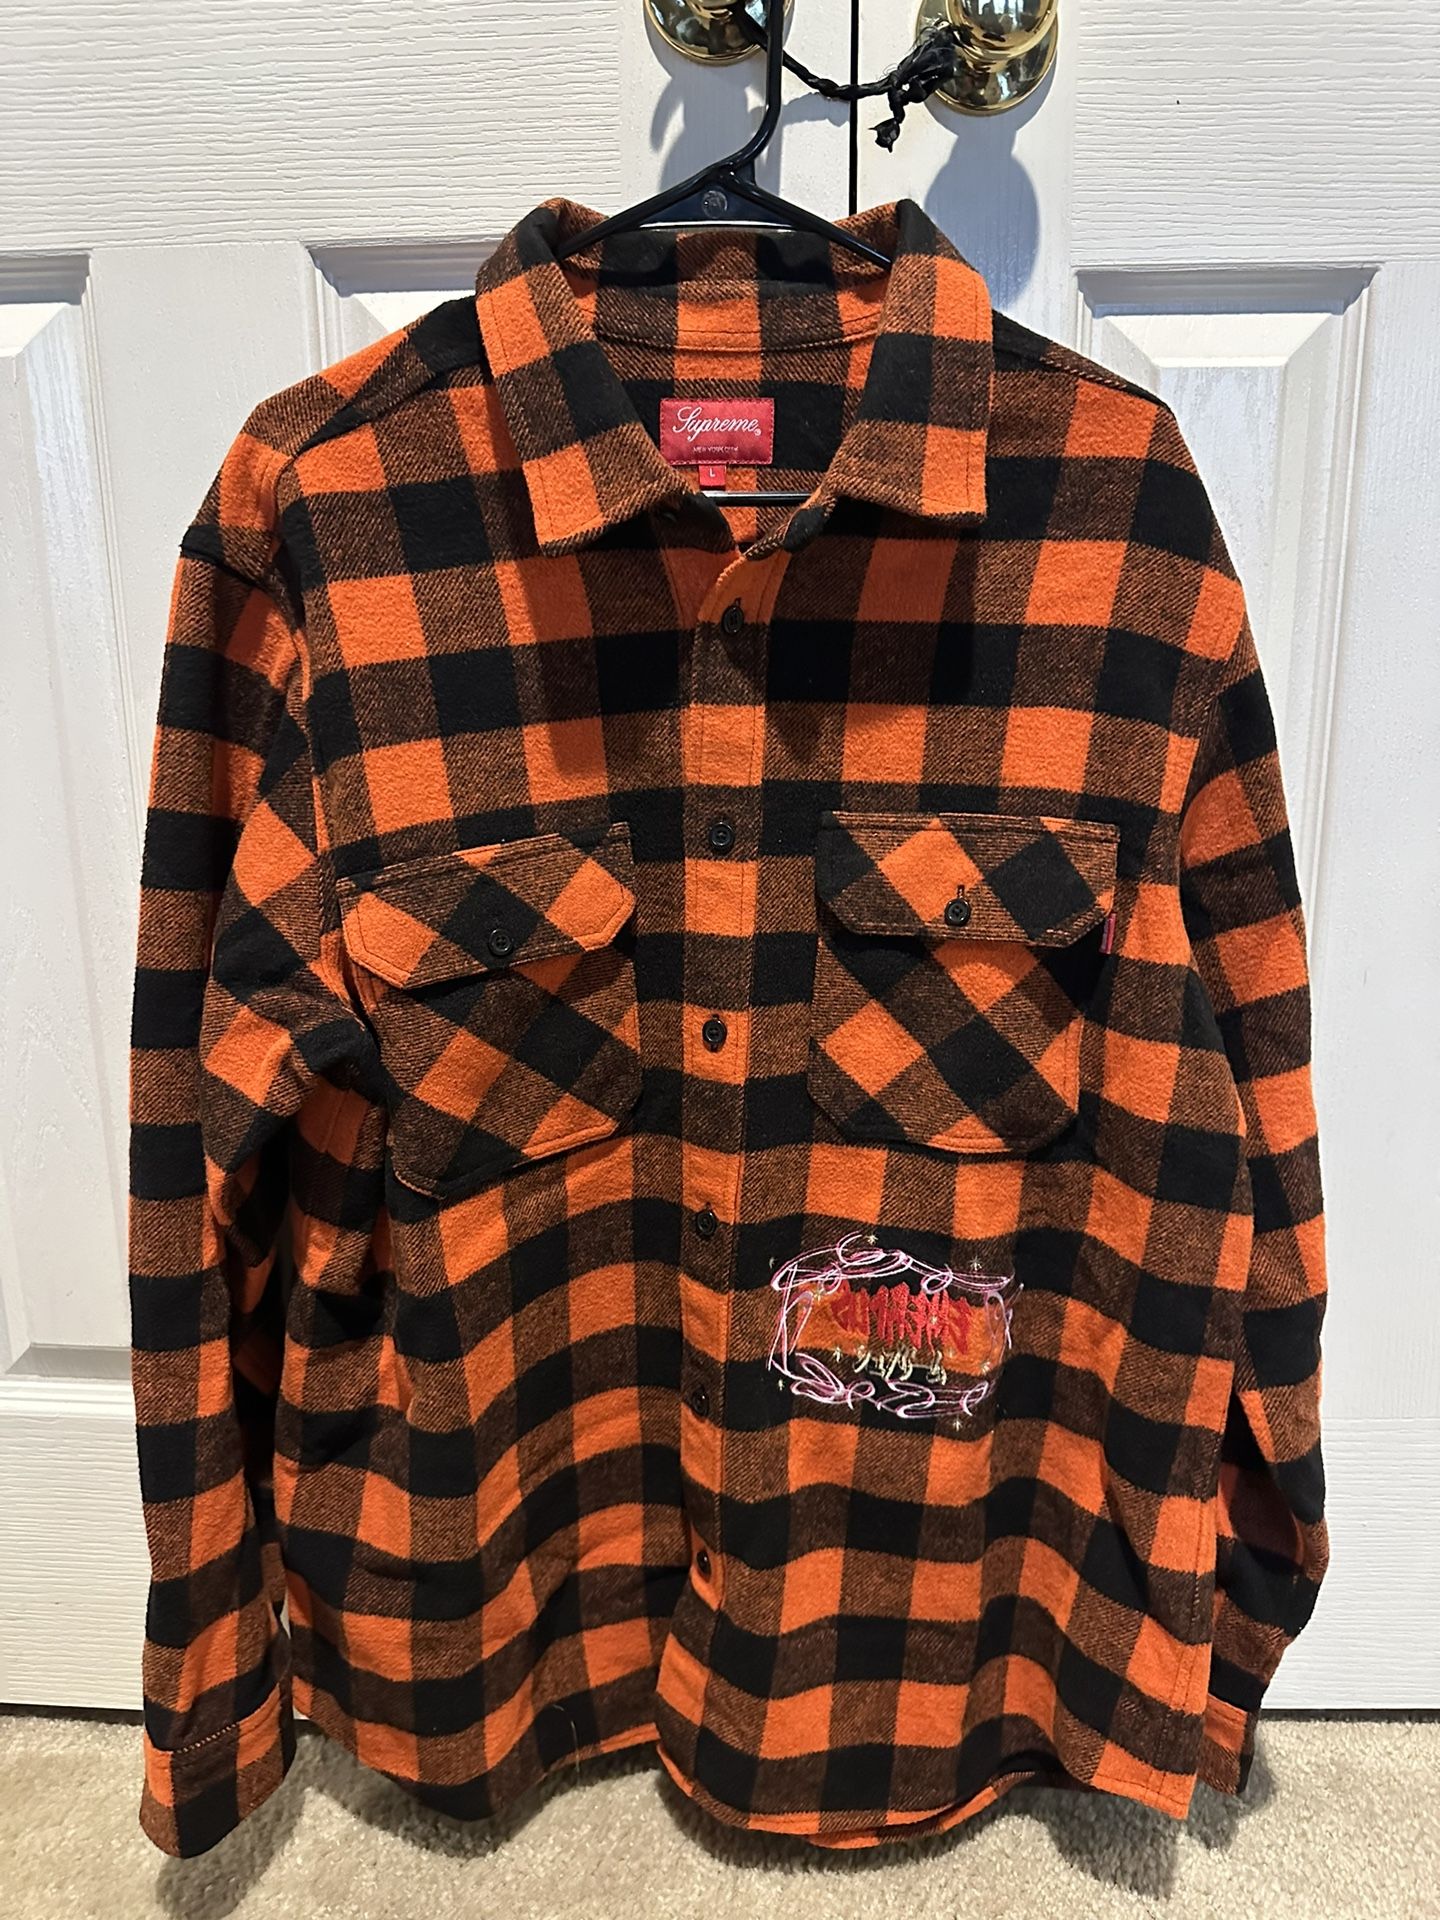 RARE Supreme Wool Blend 1-800 Buffalo Plaid Shirt Size Large Orange Black FW19